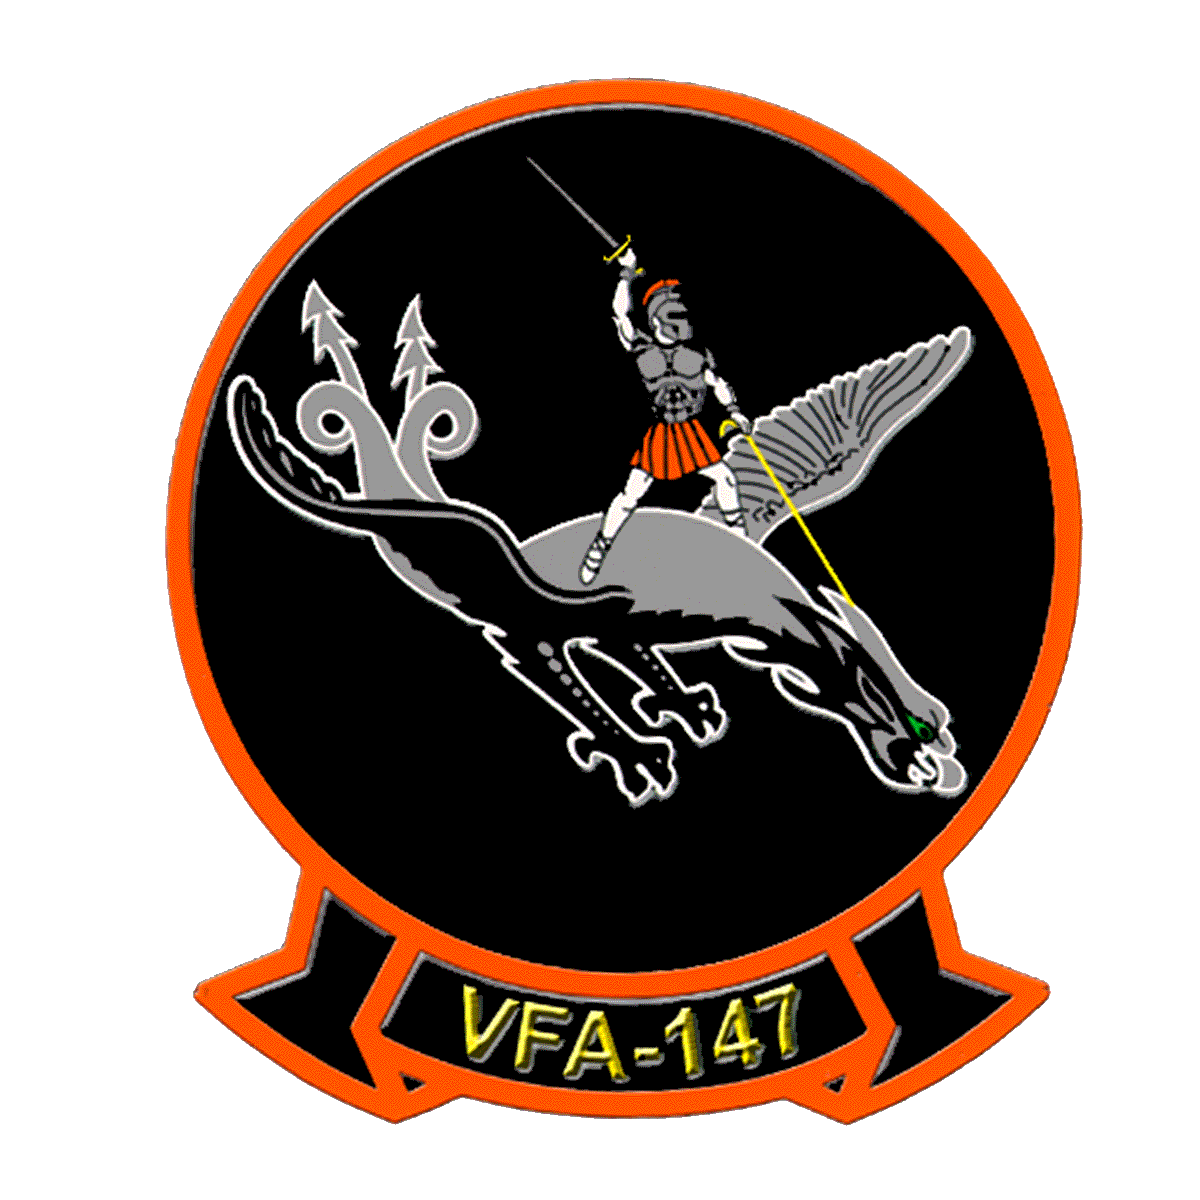 vaf-147-trasp